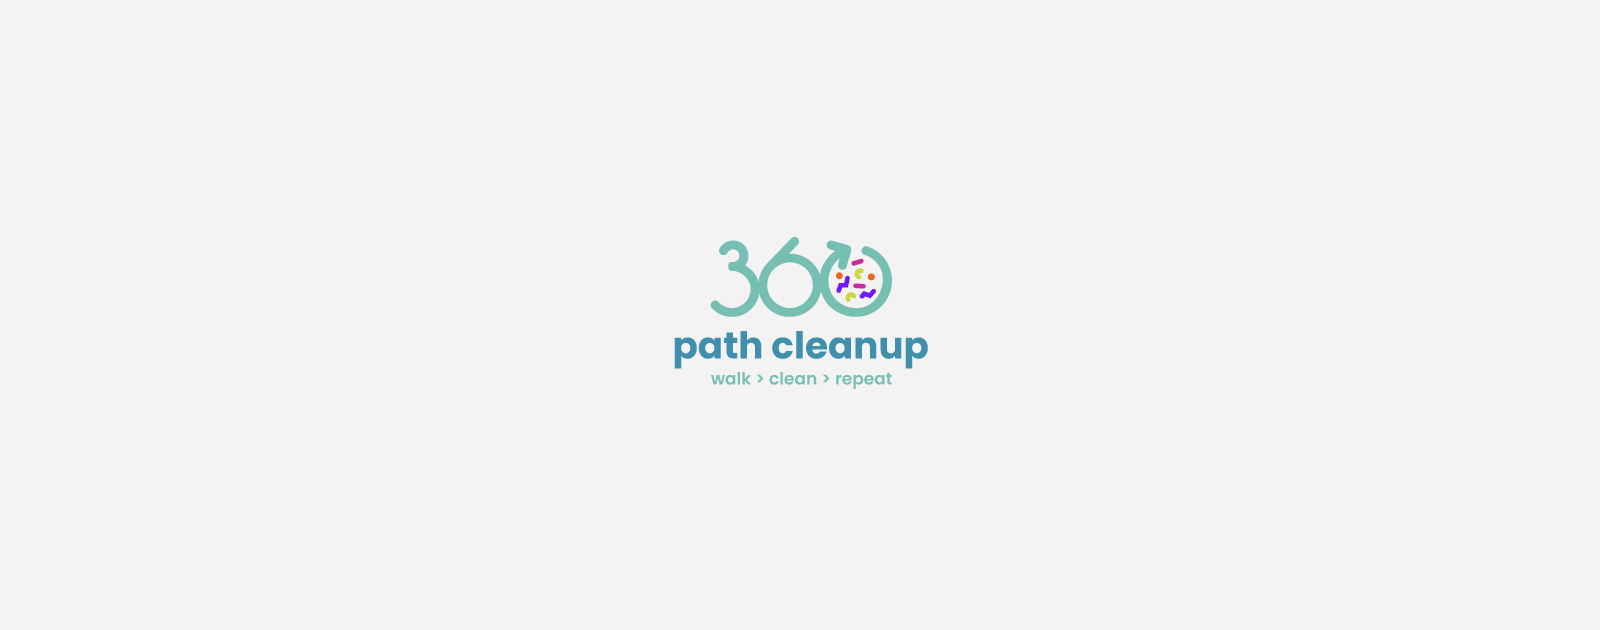 Passeggiata Ecologica a Torbole sul Garda: 360 path cleanup